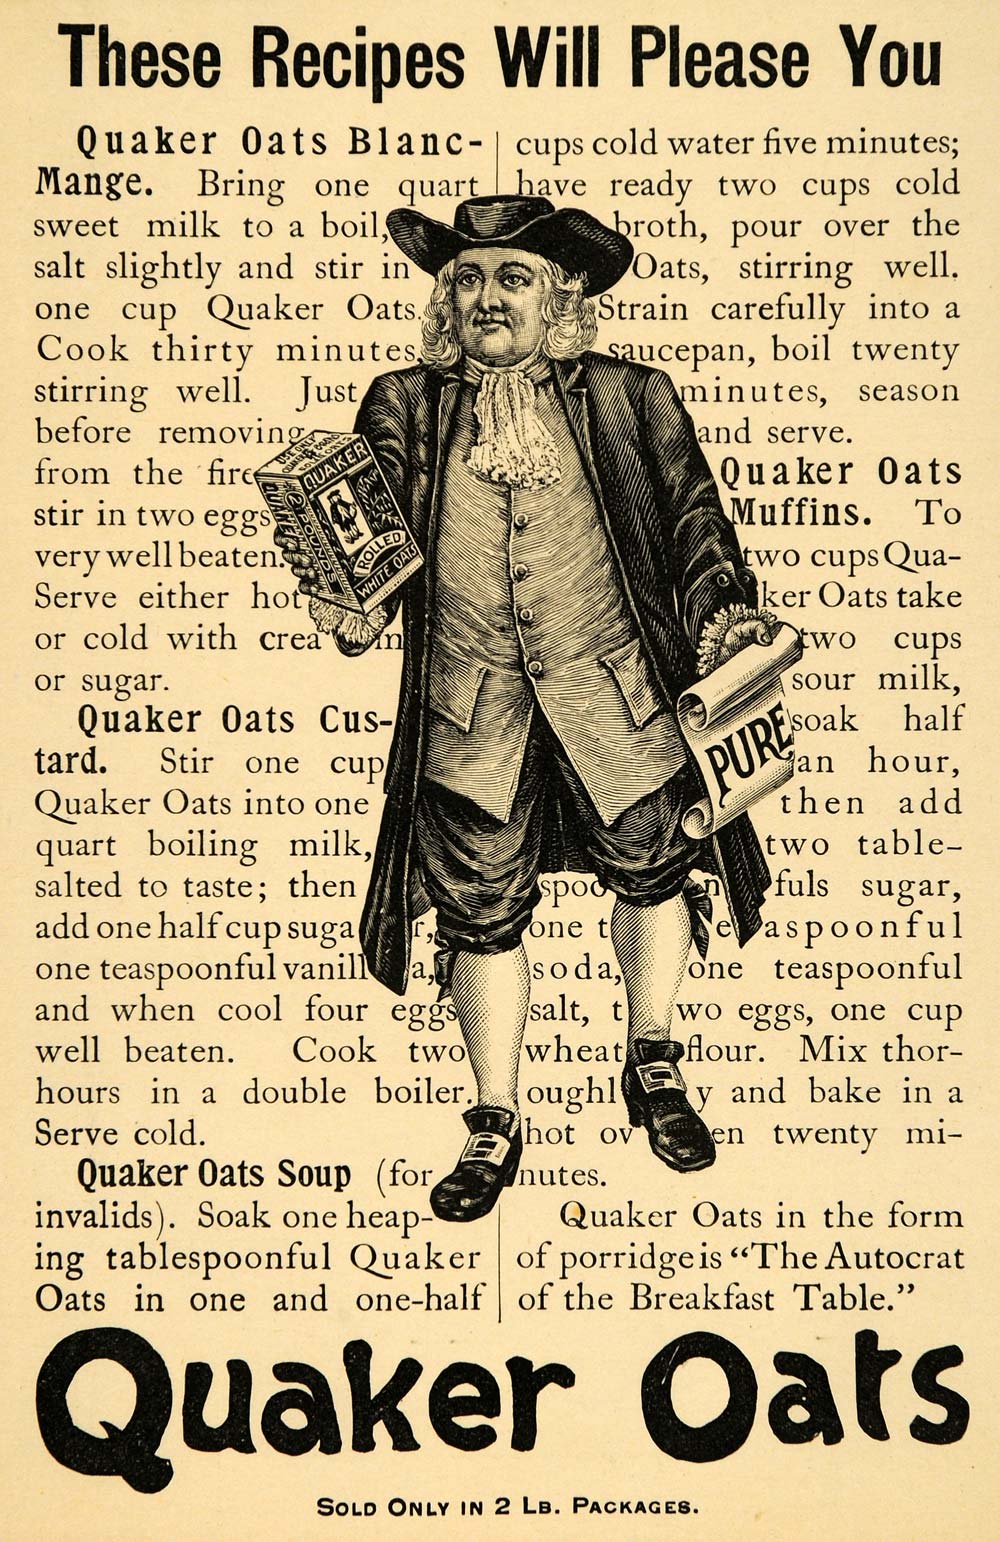 1897 Ad Quaker Oats Man Recipes Muffins Blanc-Mange - ORIGINAL ADVERTISING LHJ4